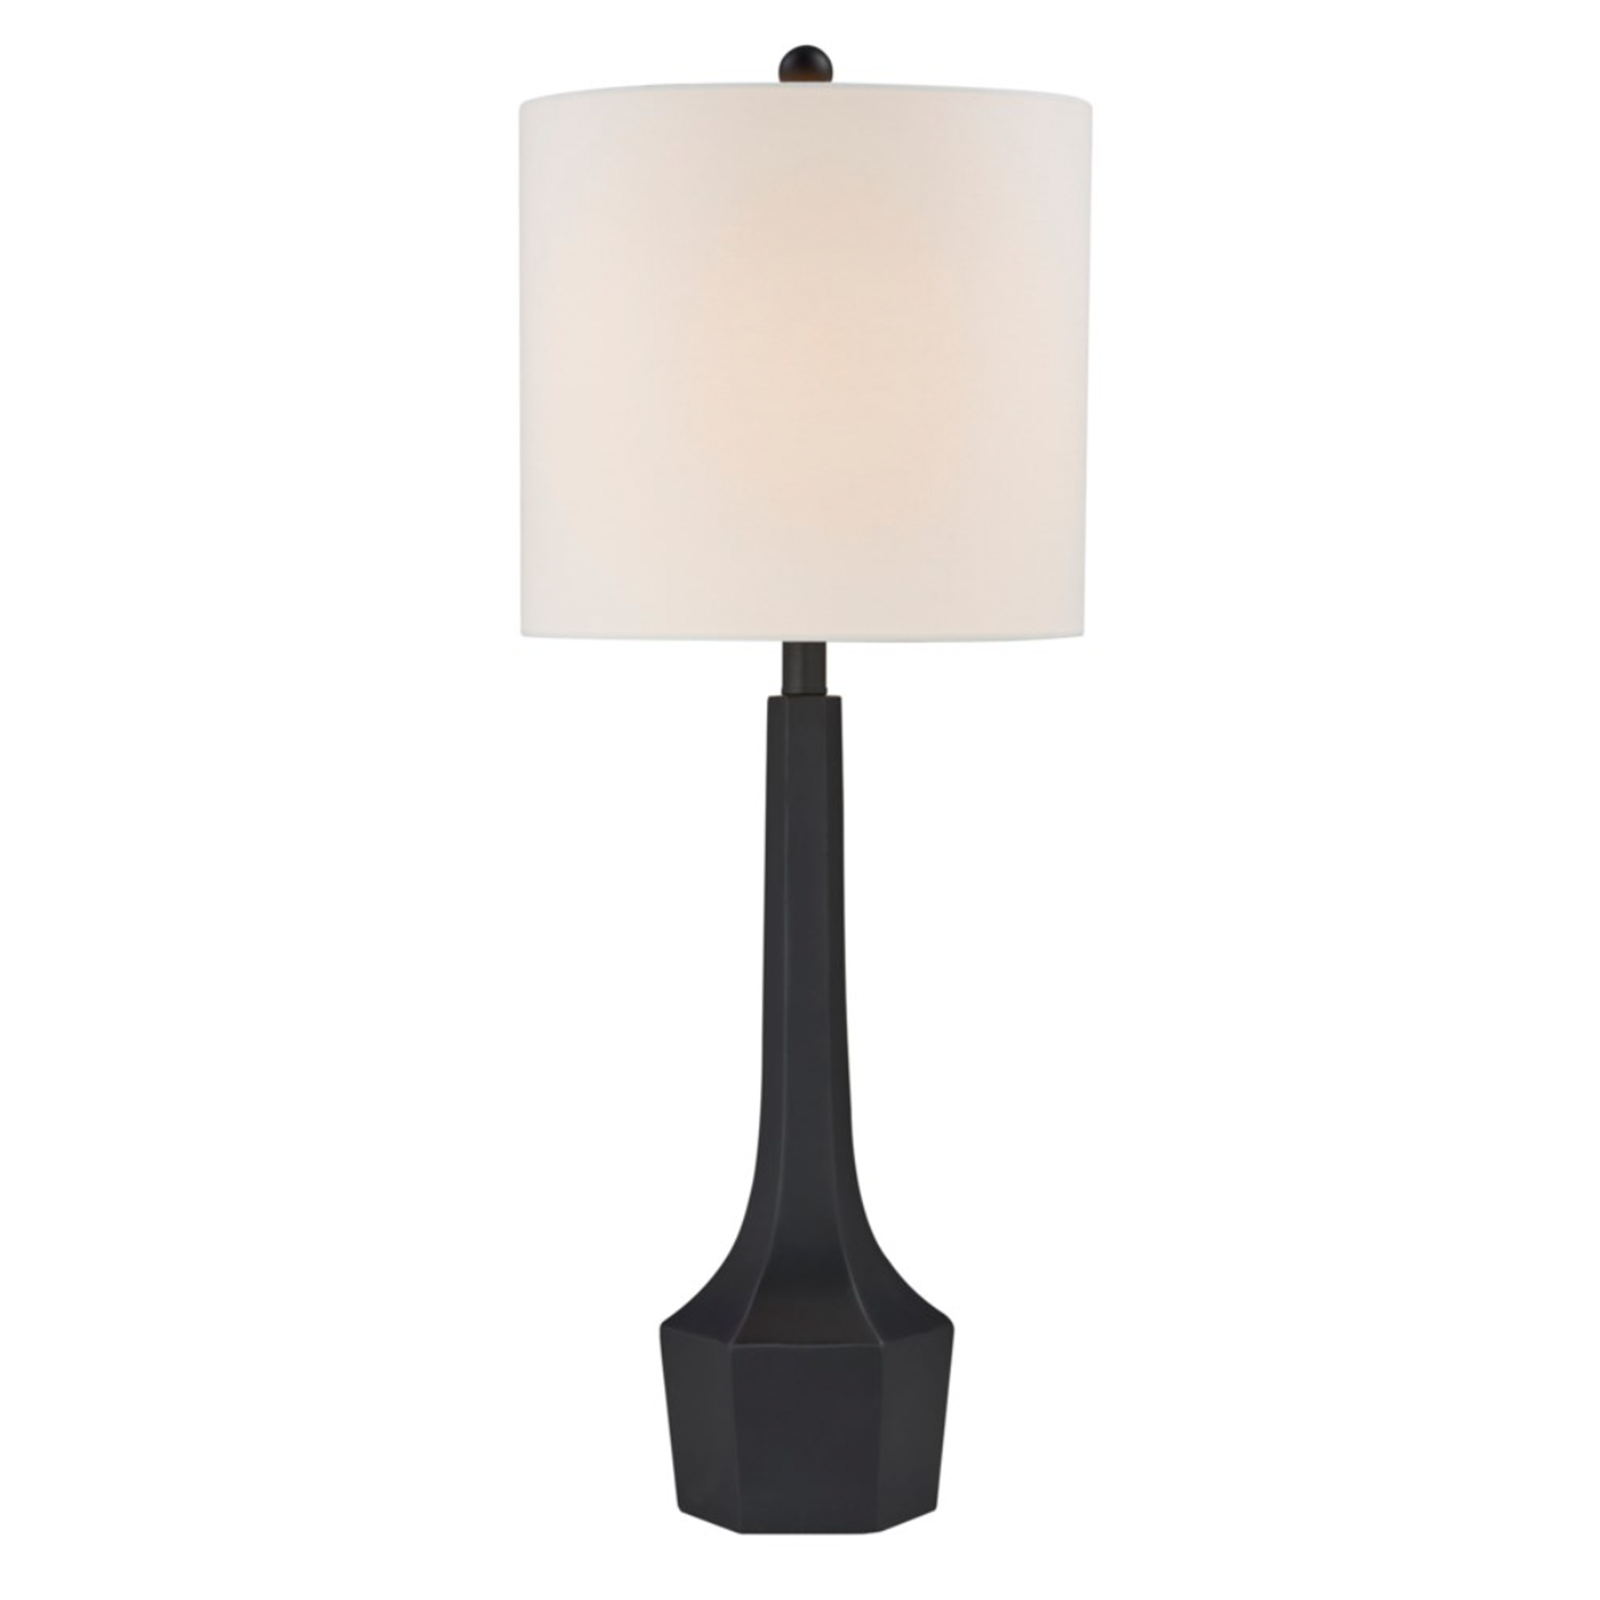 Grady Table Lamp